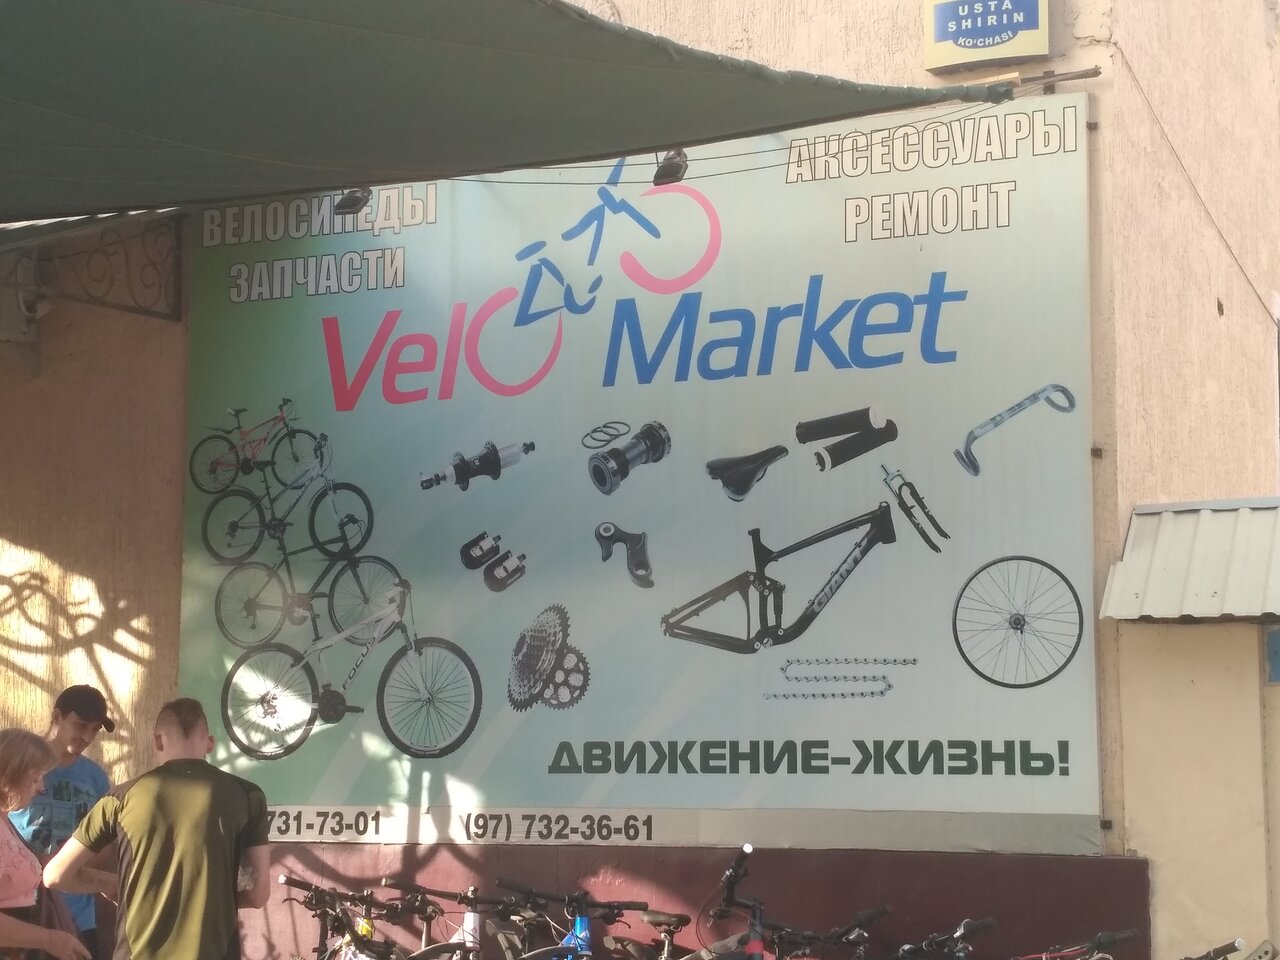 Velo Market